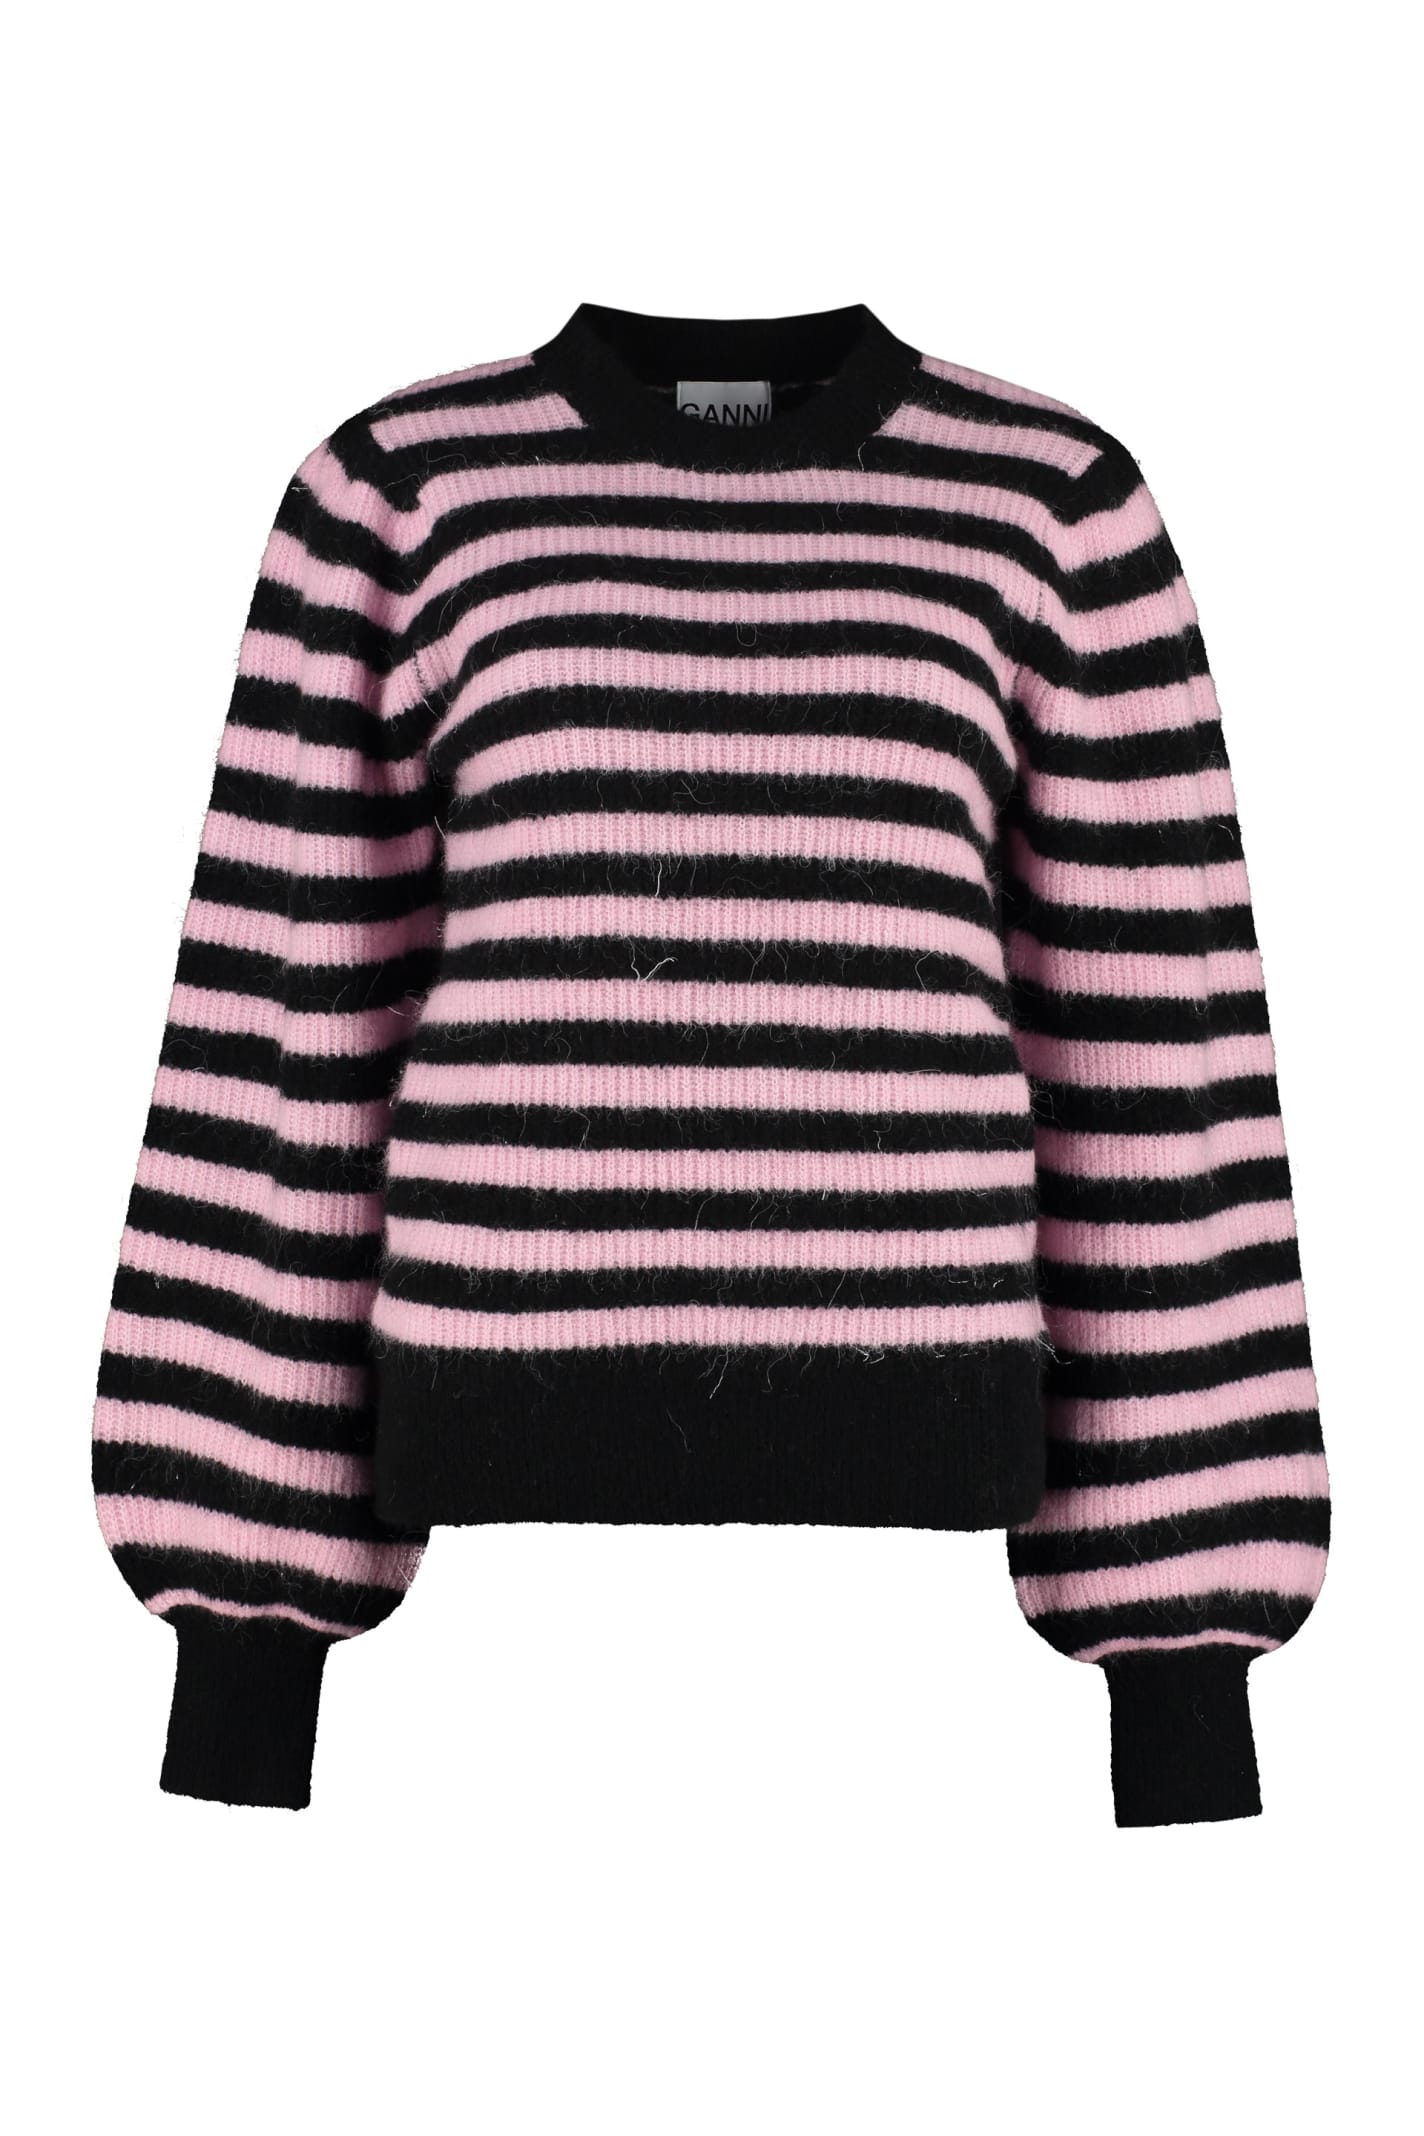 Ganni Striped Crew-neck Sweater